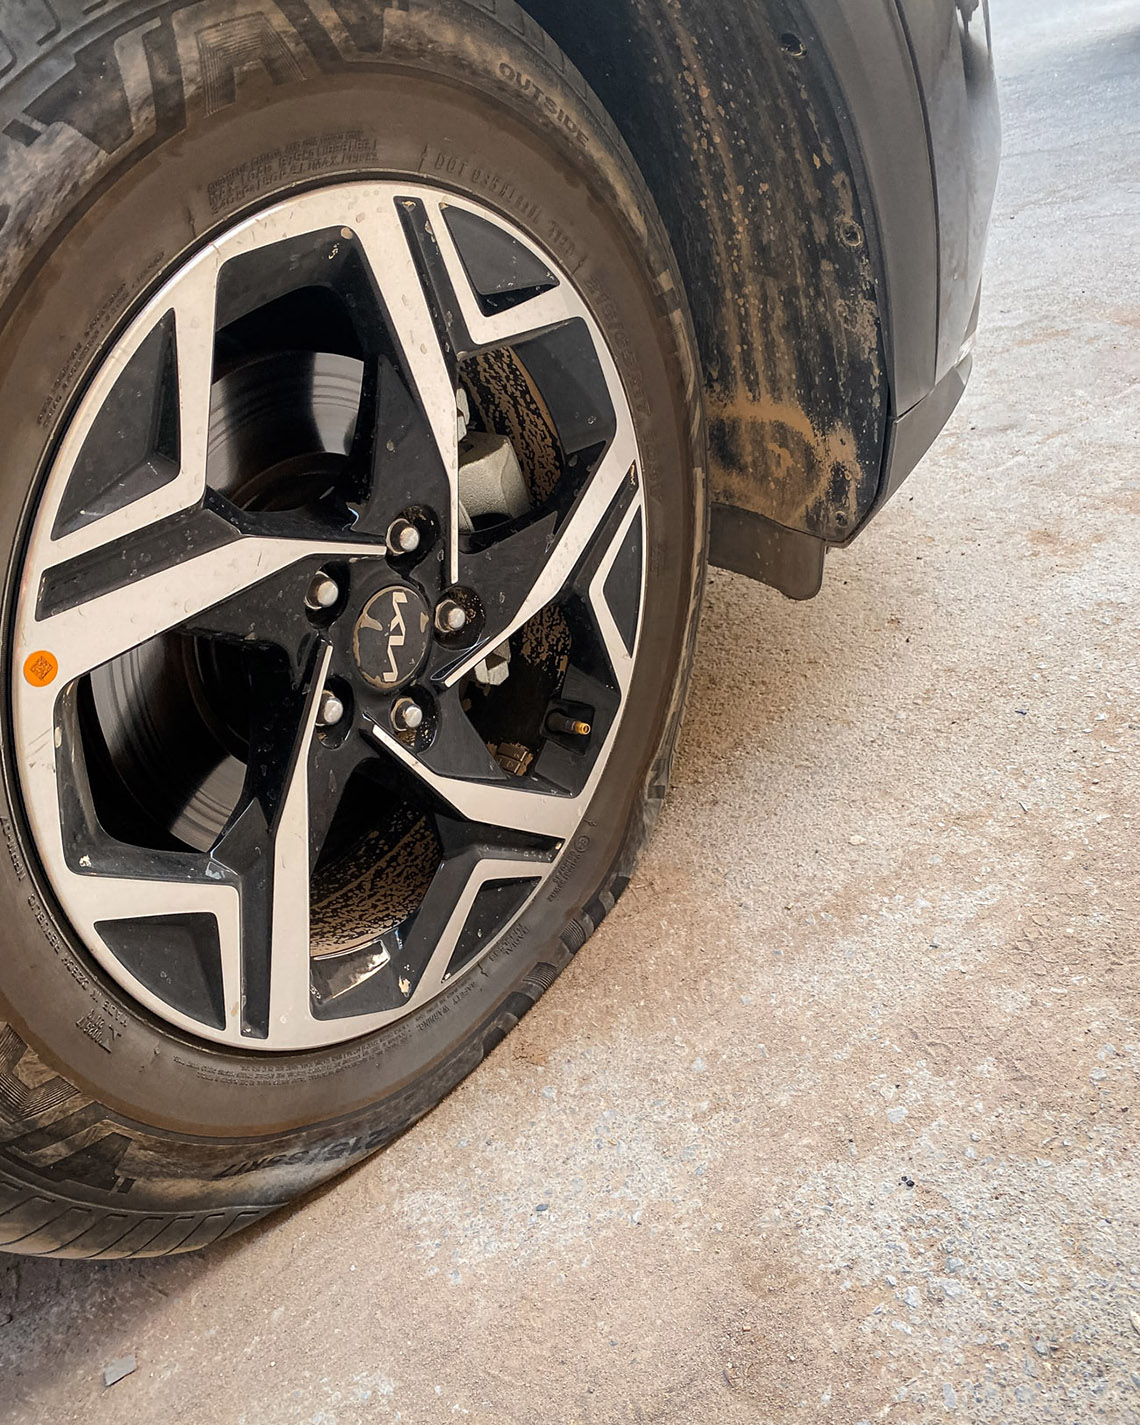 Flat Tyre on Saudi Arabia Road